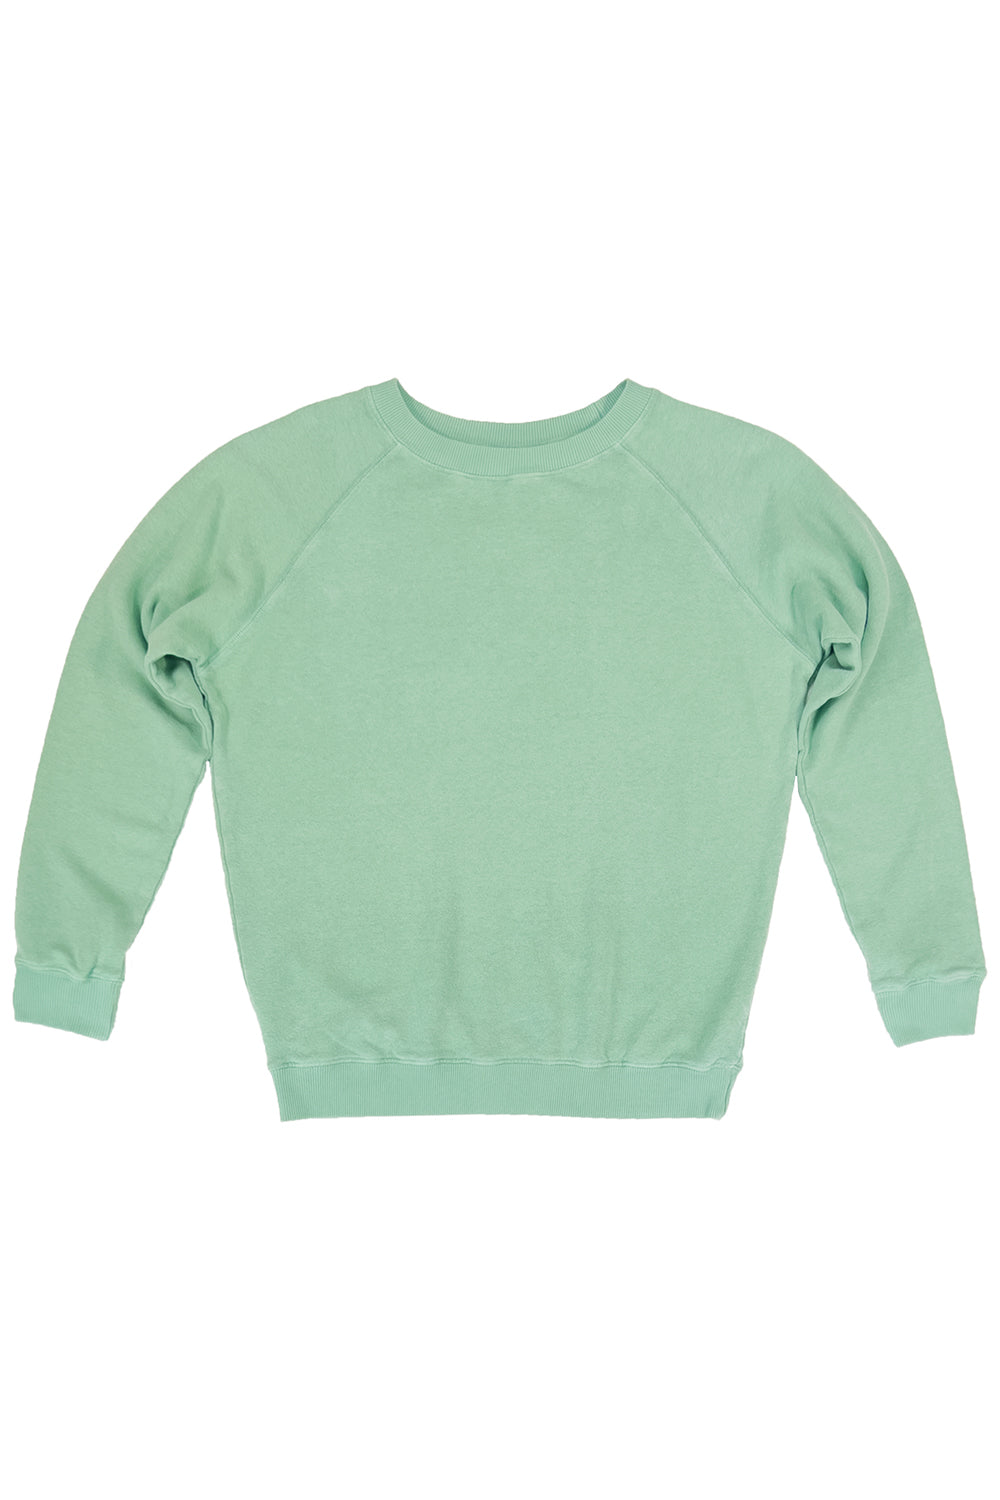 Bonfire Raglan Sweatshirt | Jungmaven Hemp Clothing & Accessories / Color: Sage Green